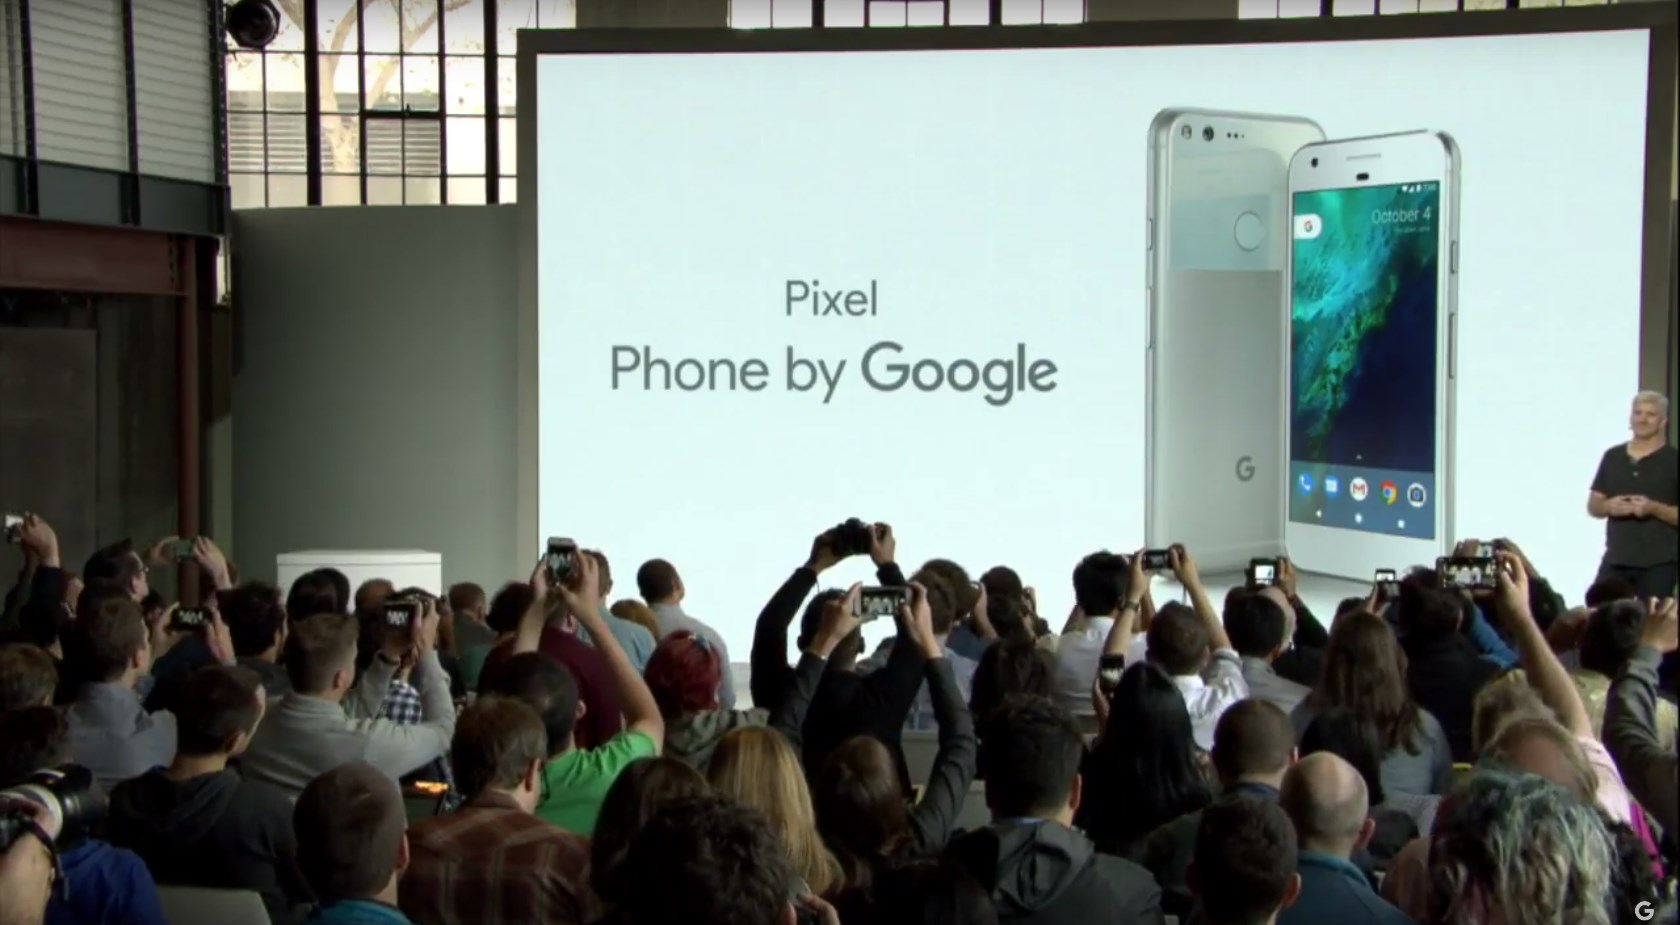 pixel phone by Google